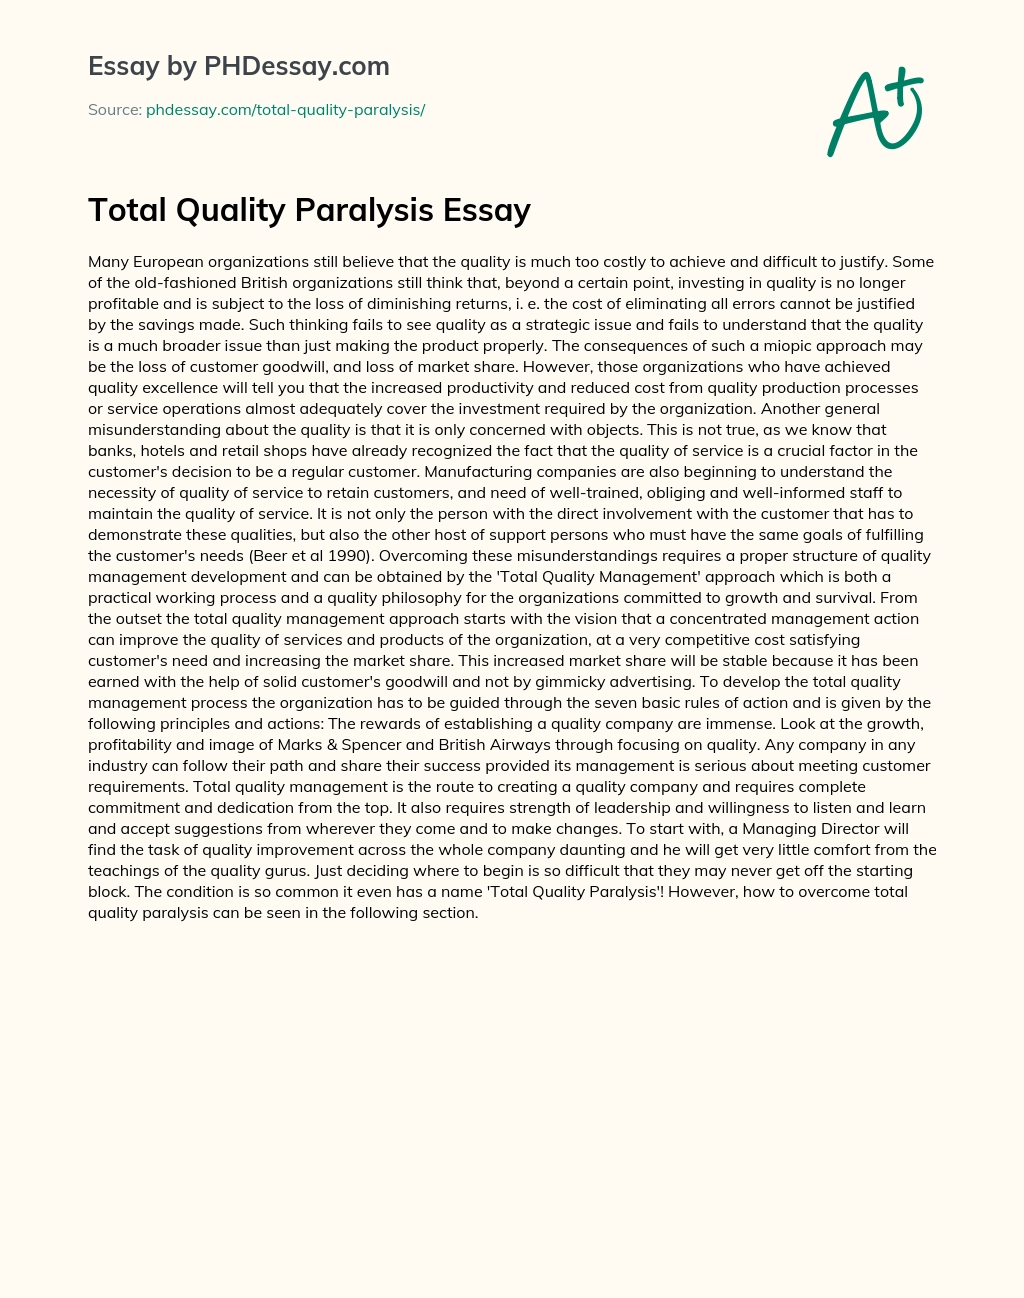 Total Quality Paralysis Essay essay